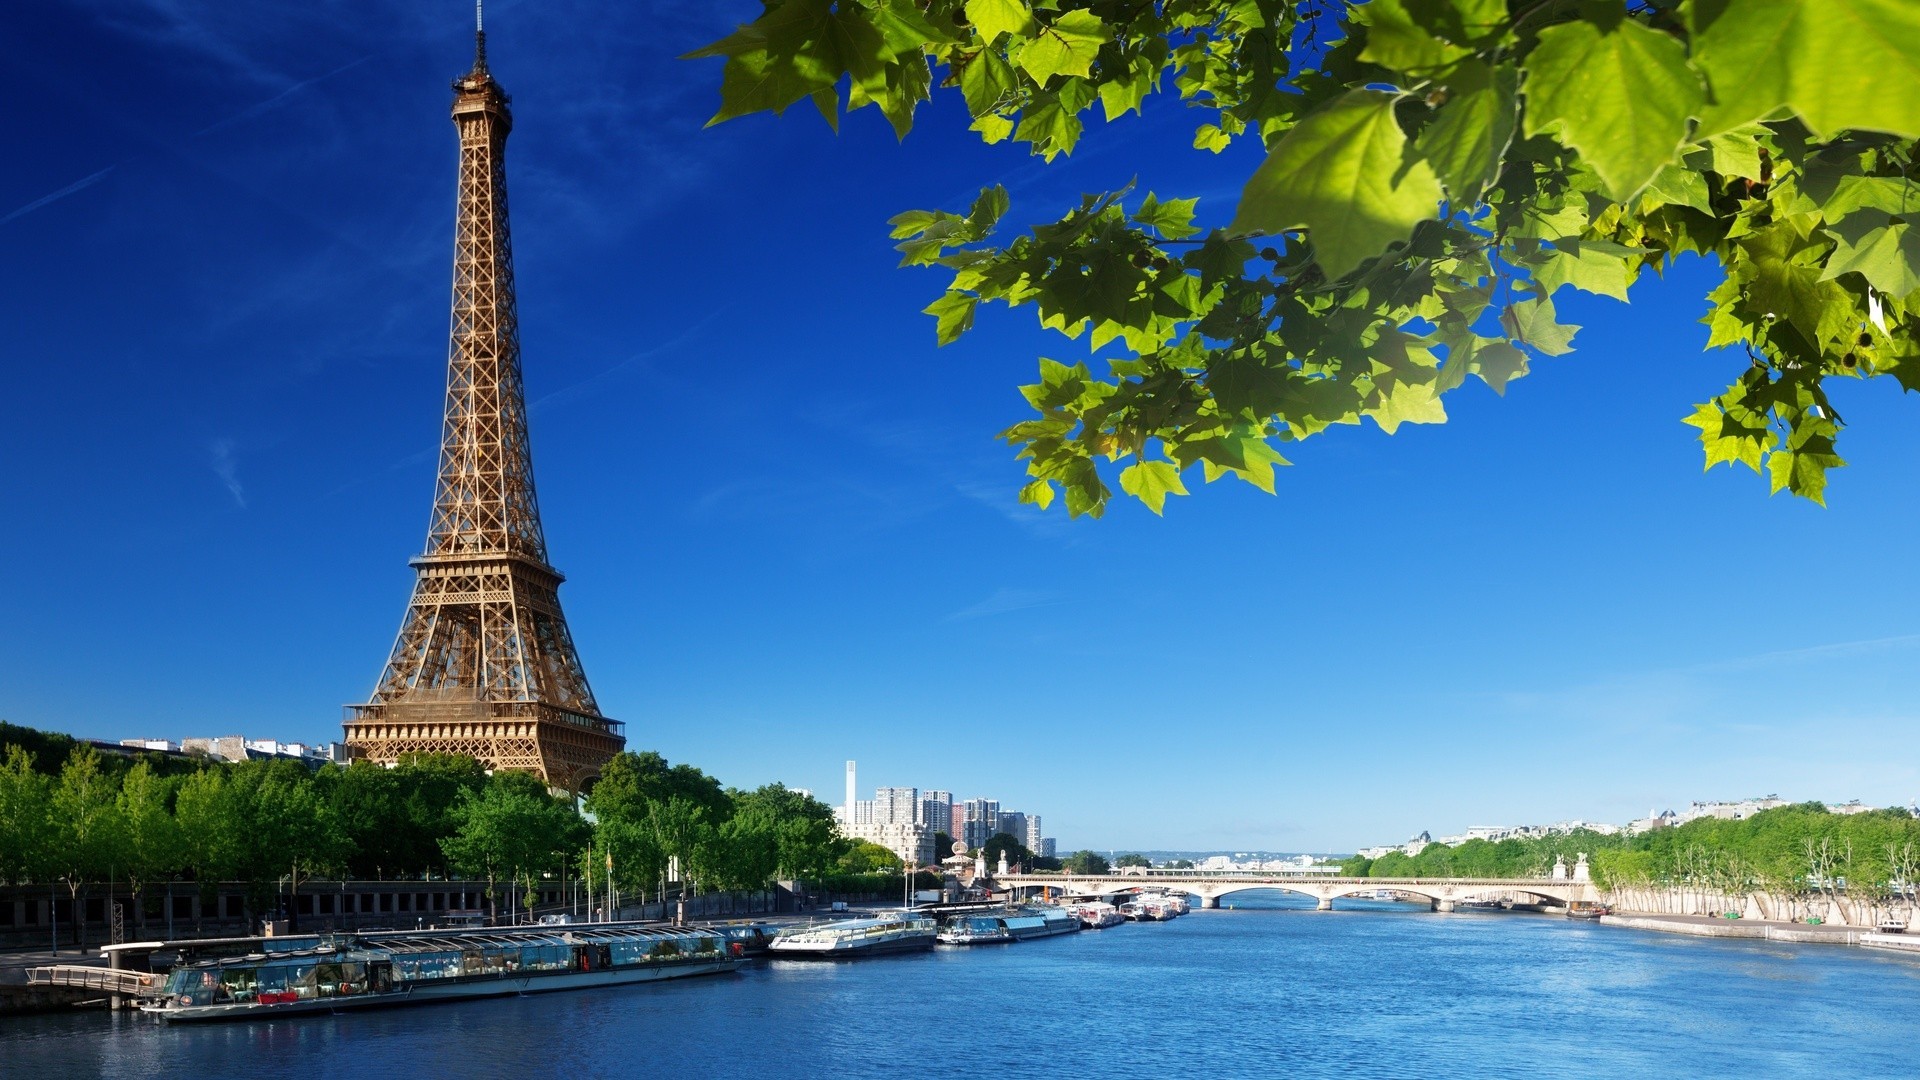 General 1920x1080 Paris Eiffel Tower river boat France Seine  cityscape sky landmark Europe